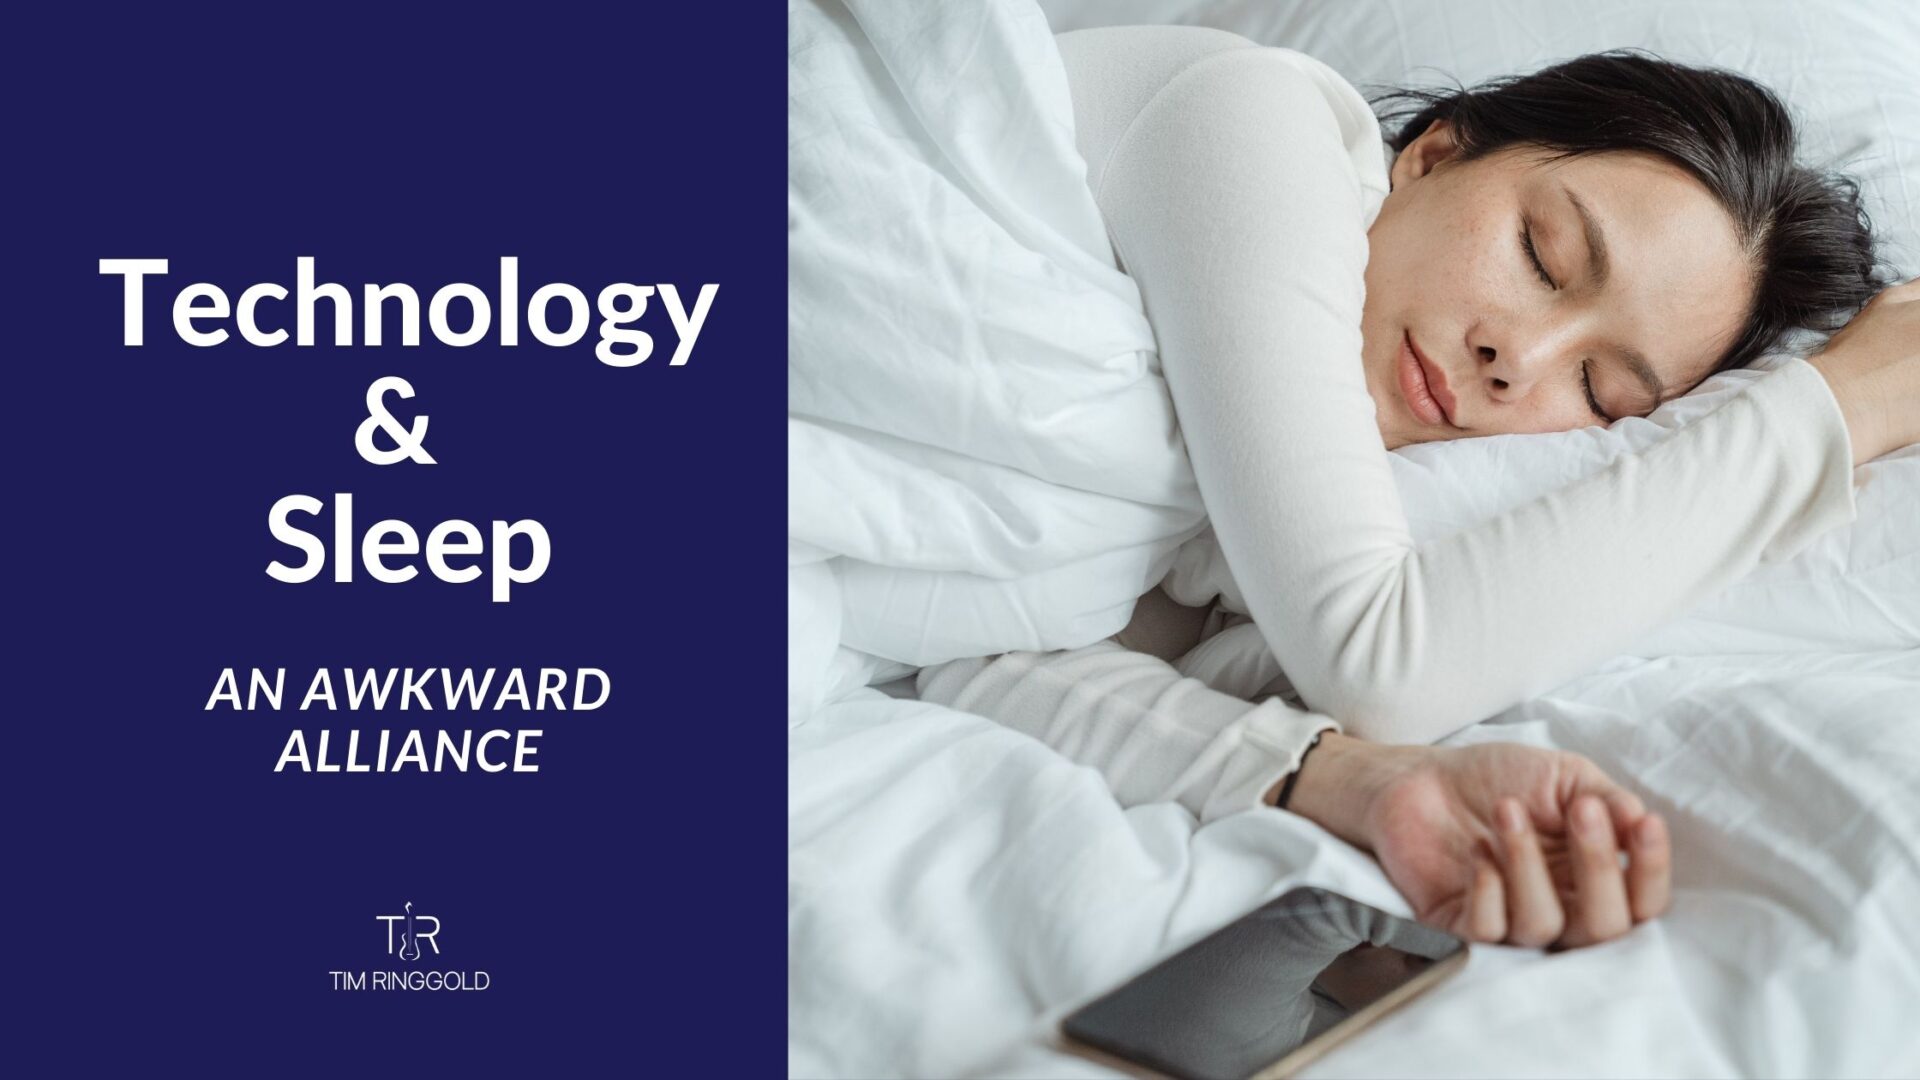 Technology & Sleep: An Awkward Alliance